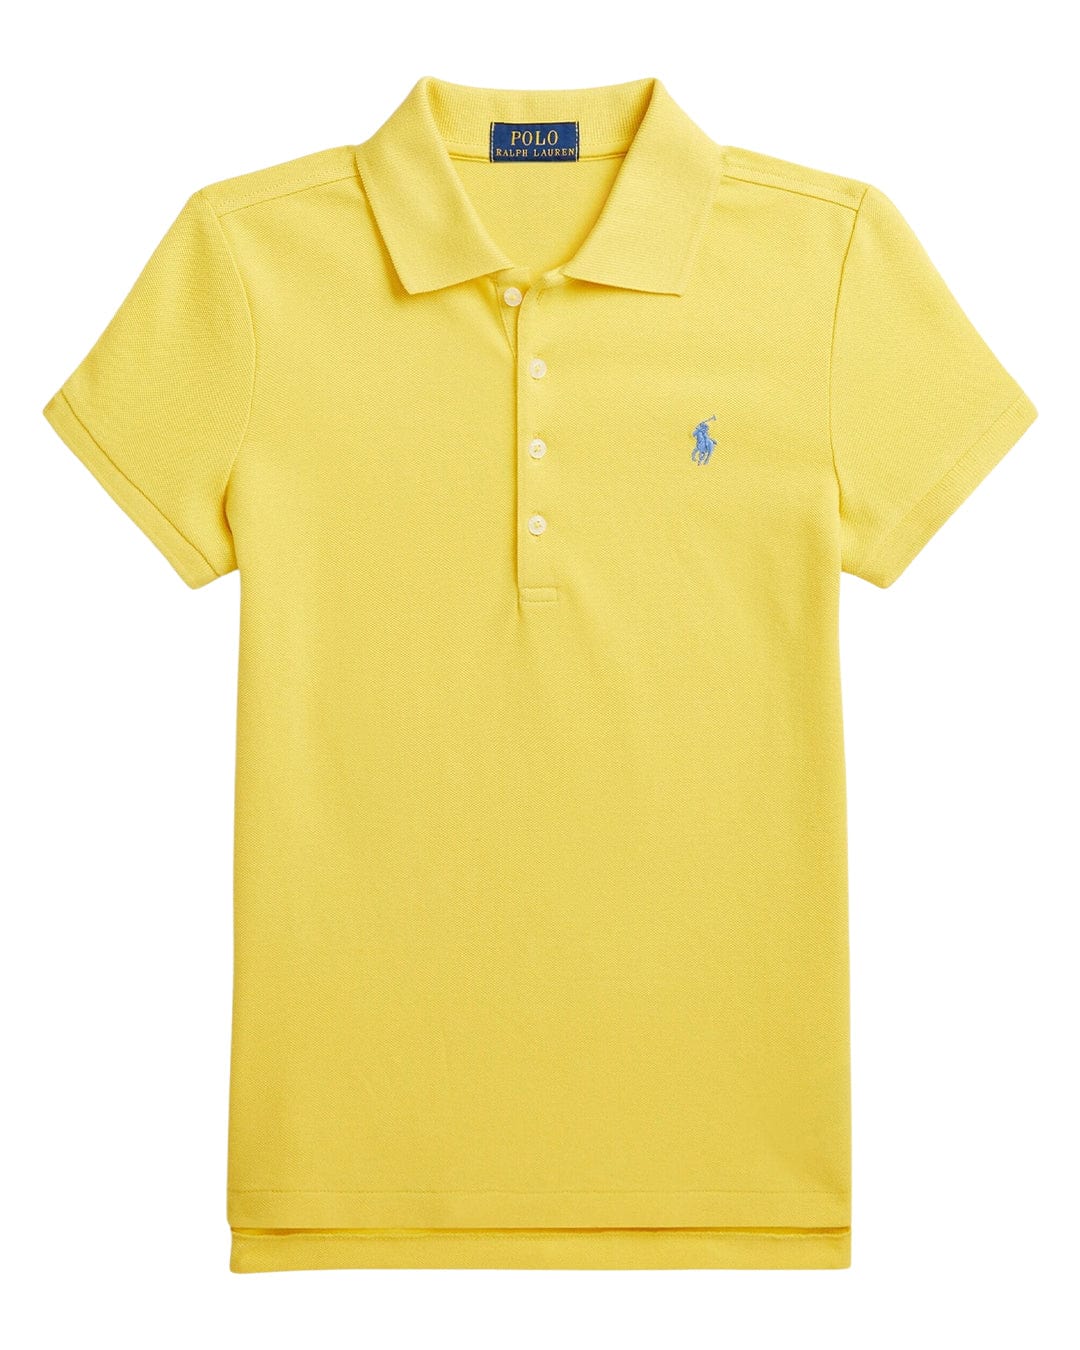 Polo Ralph Lauren Polo Shirts Girls Yellow Short Sleeved Polo Shirt